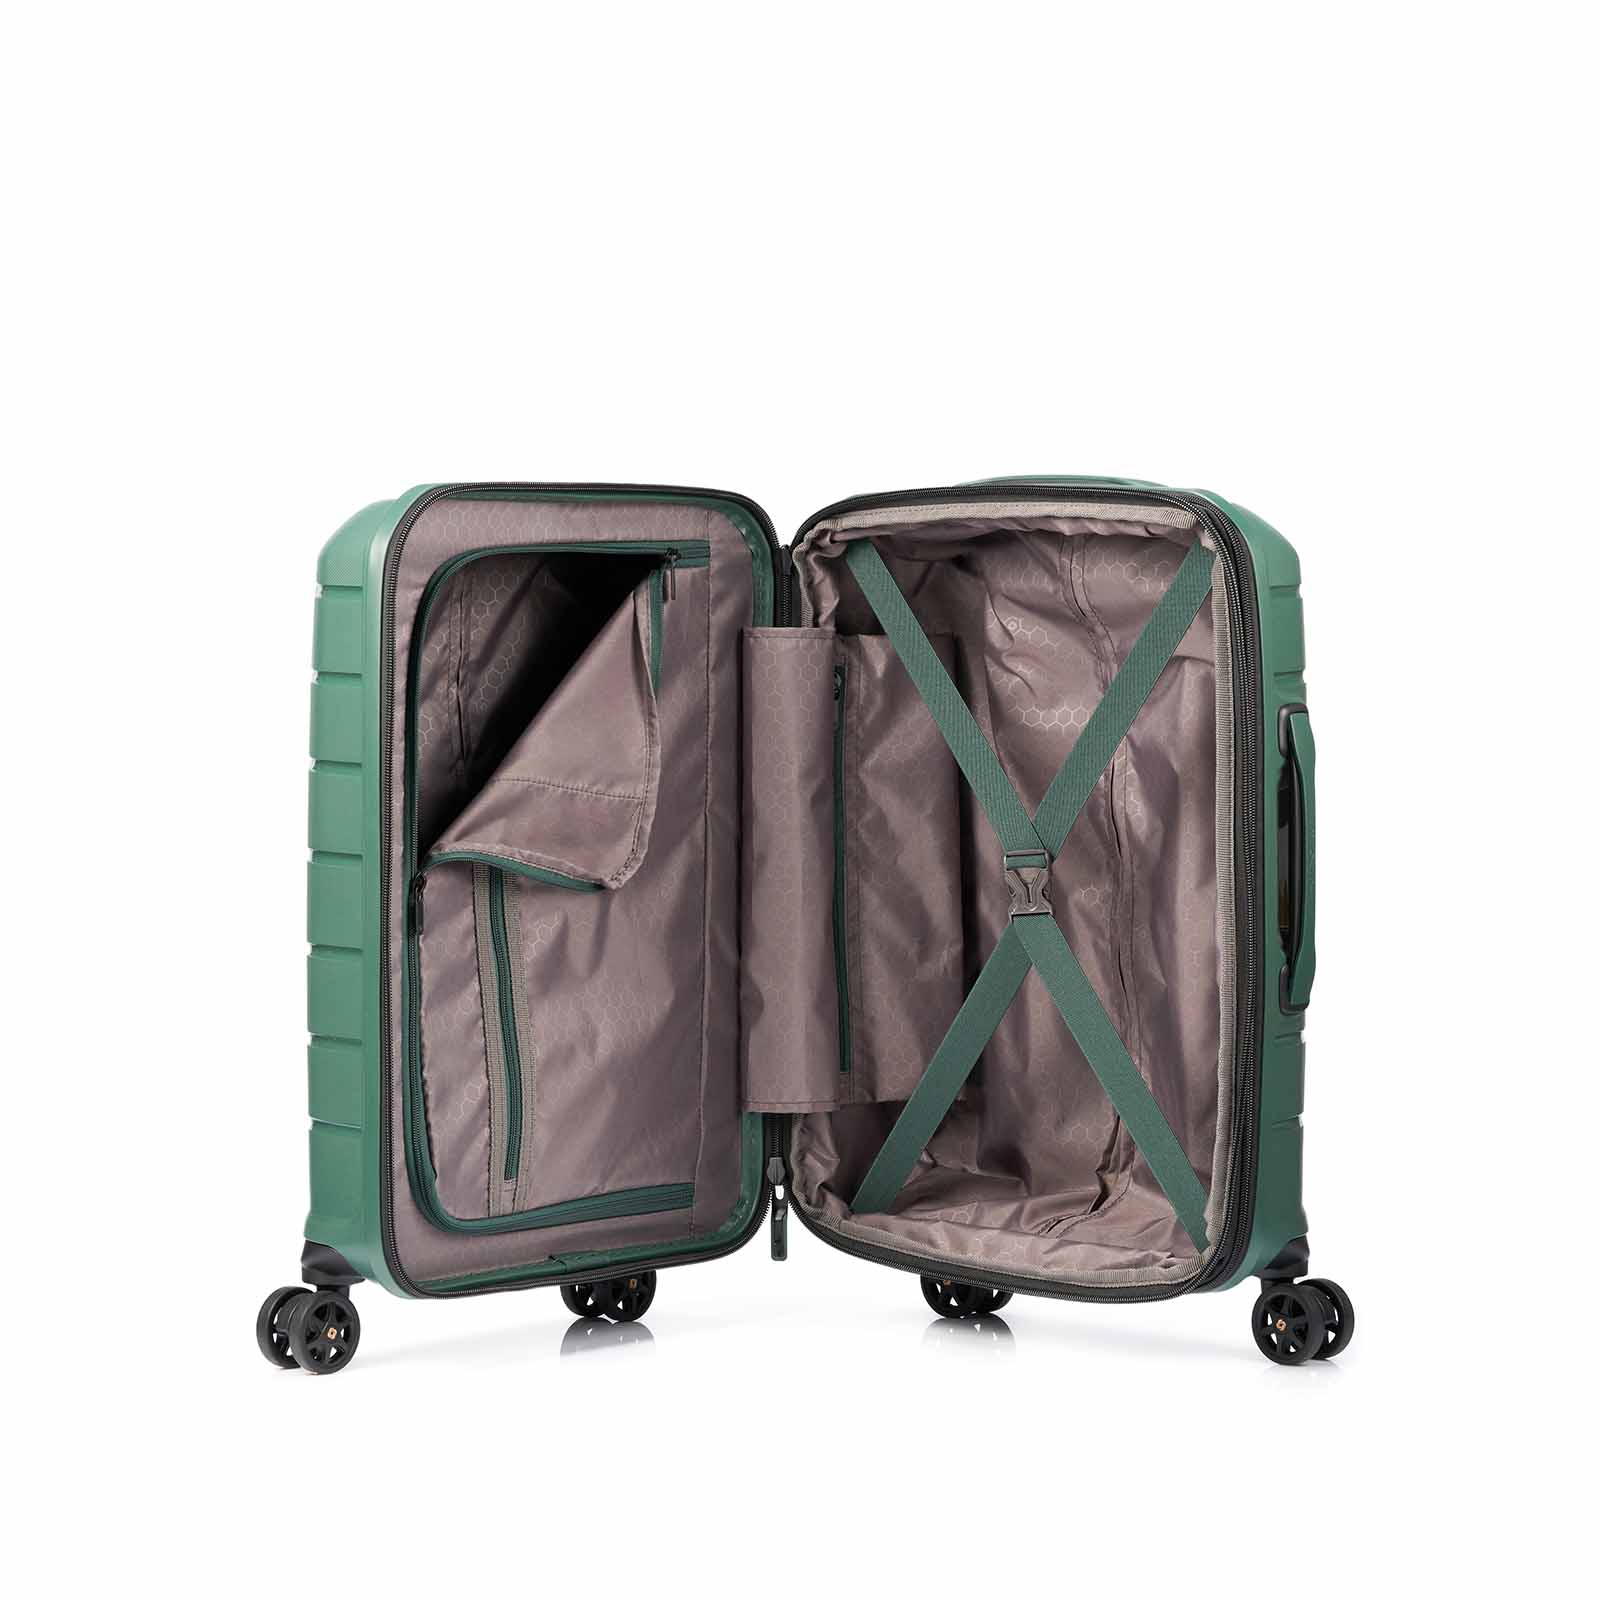 Samsonite-Oc2lite-55cm-Carry-On-Suitcase-Urban-Green-Open